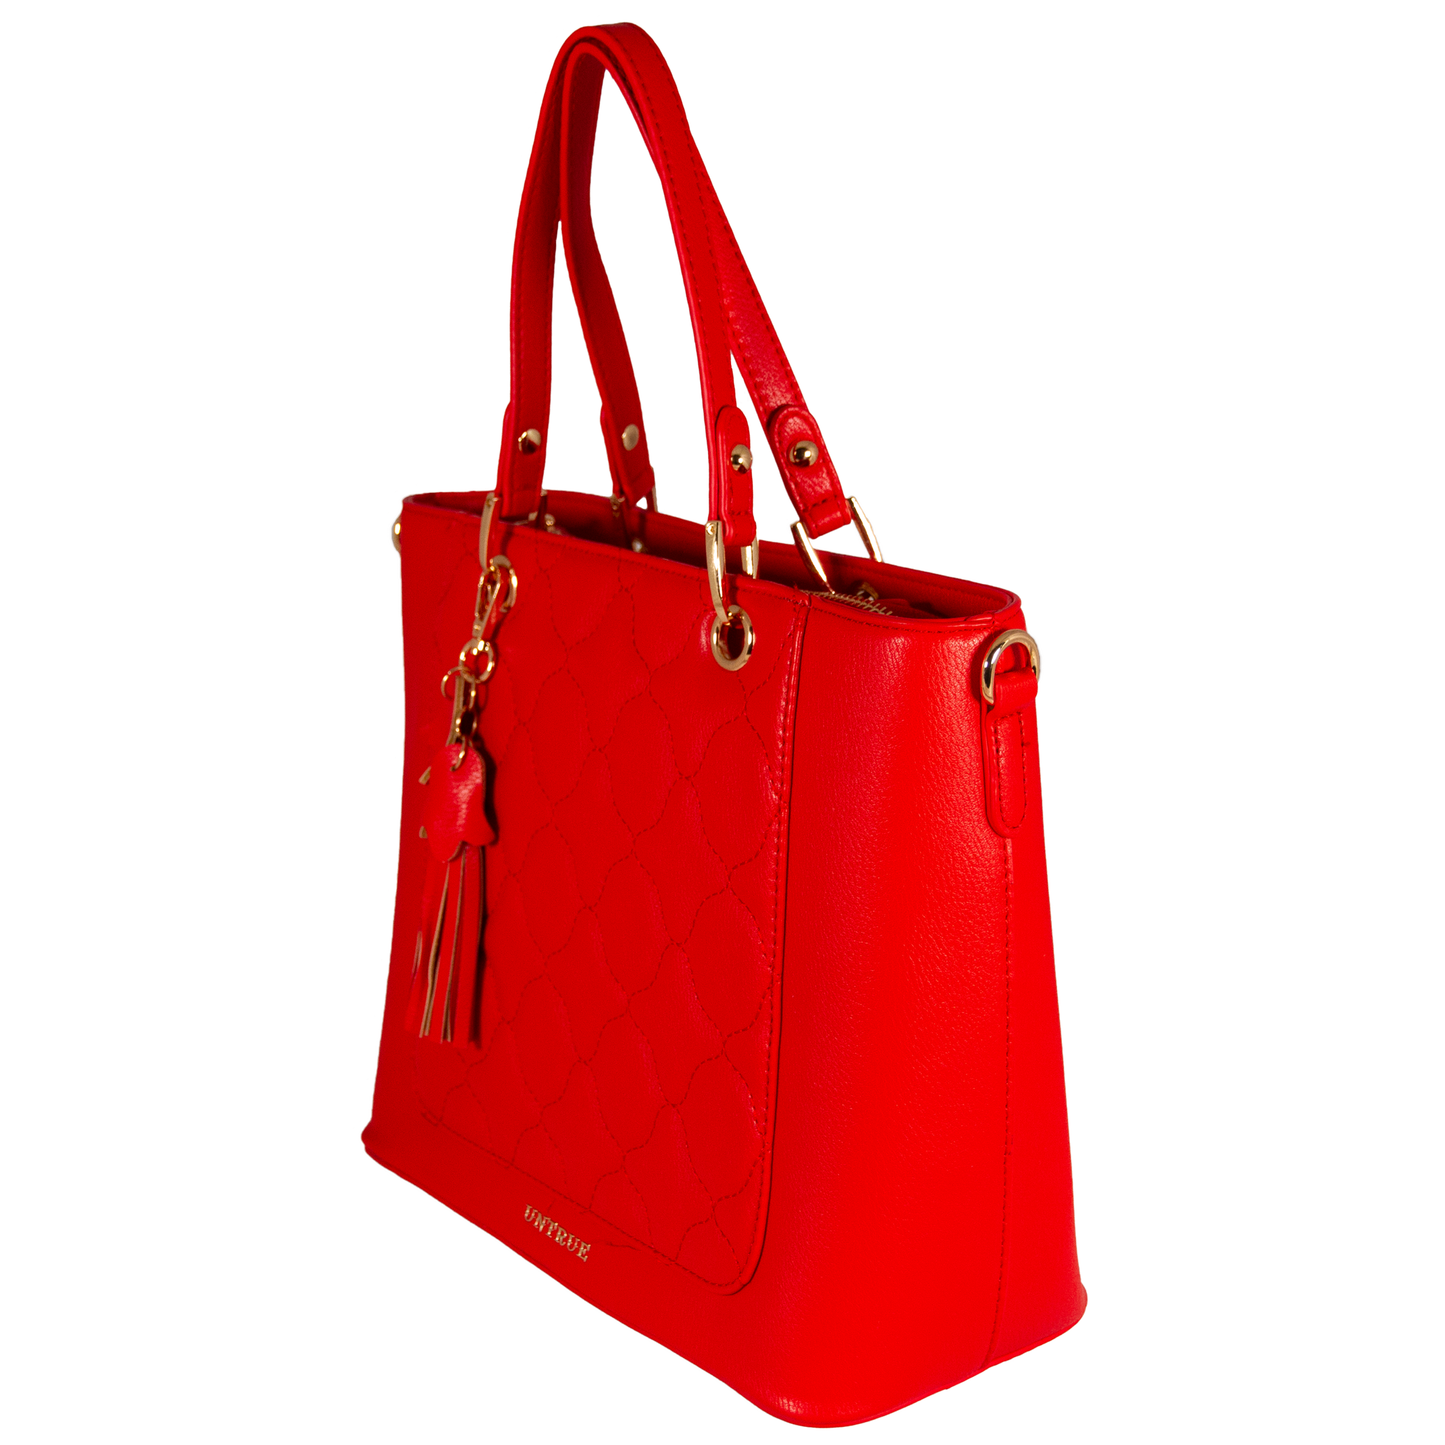 E7FW Women’s Charm Tote Bag - Red